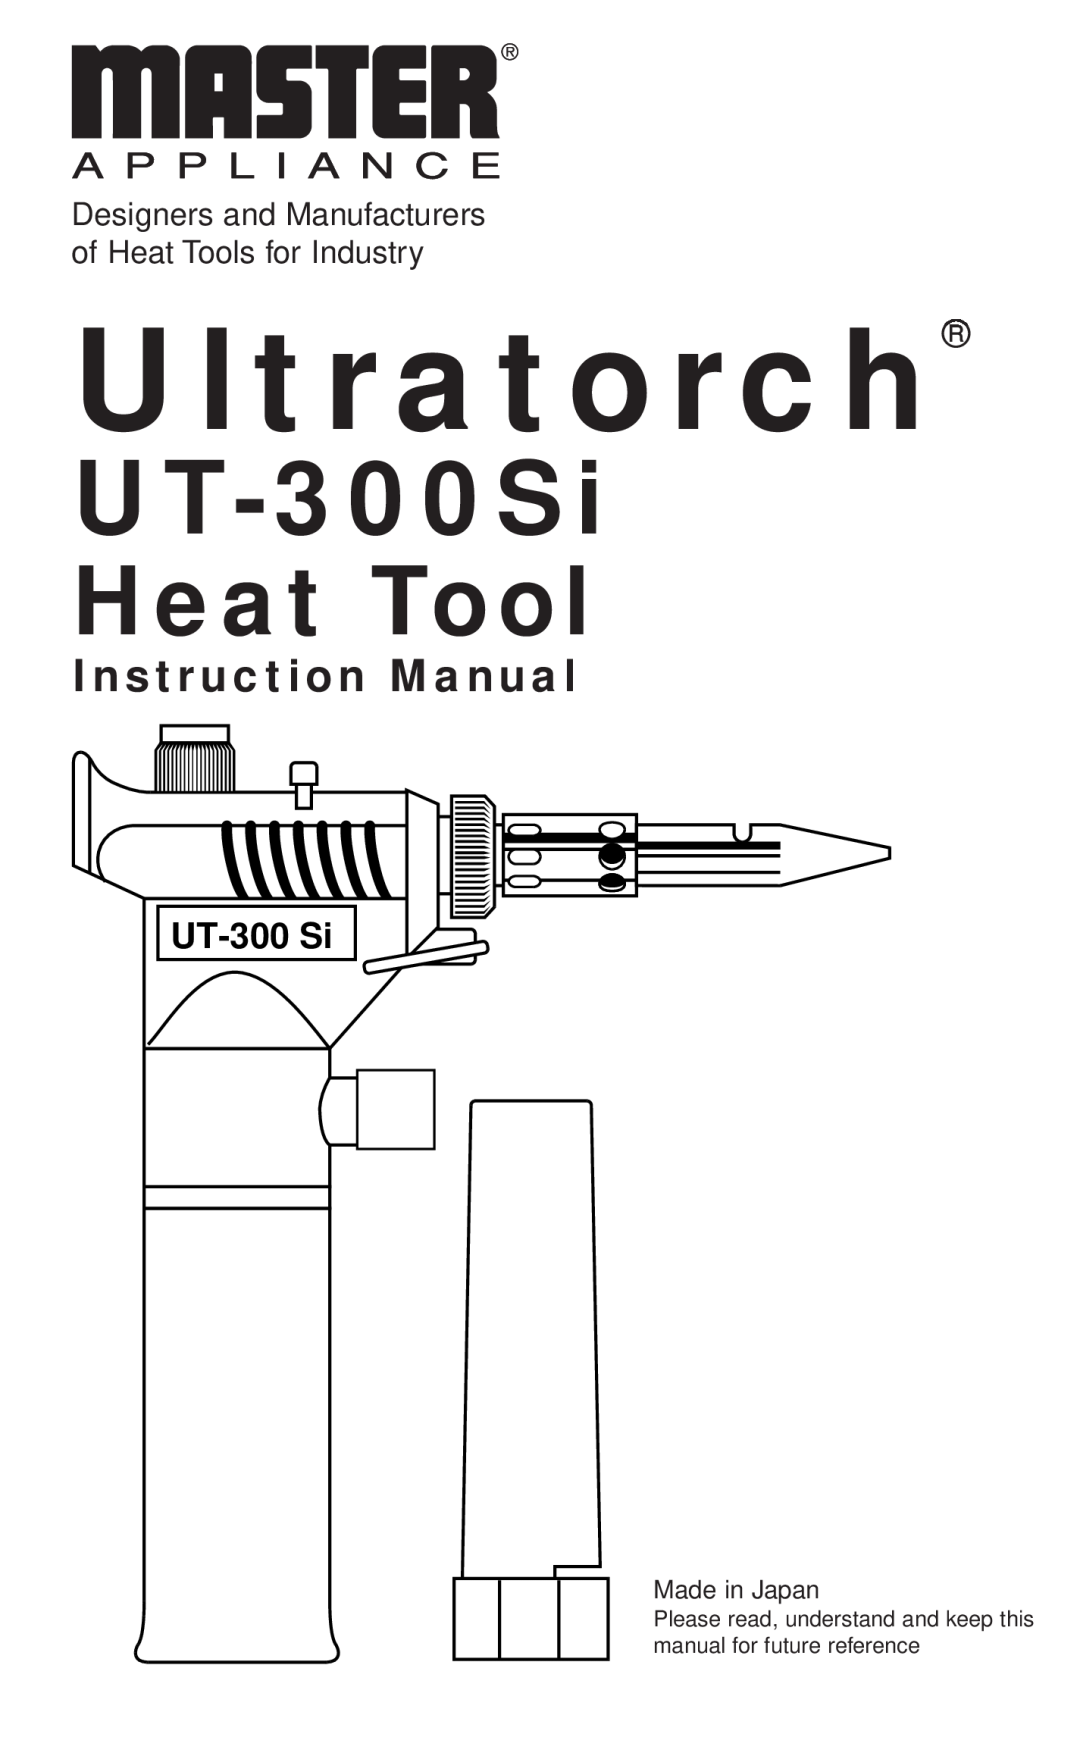 Master Appliance UT-300SI instruction manual Ultratorch, UT-300Si, Heat Tool, Instruction Manual, UT-300 Si 